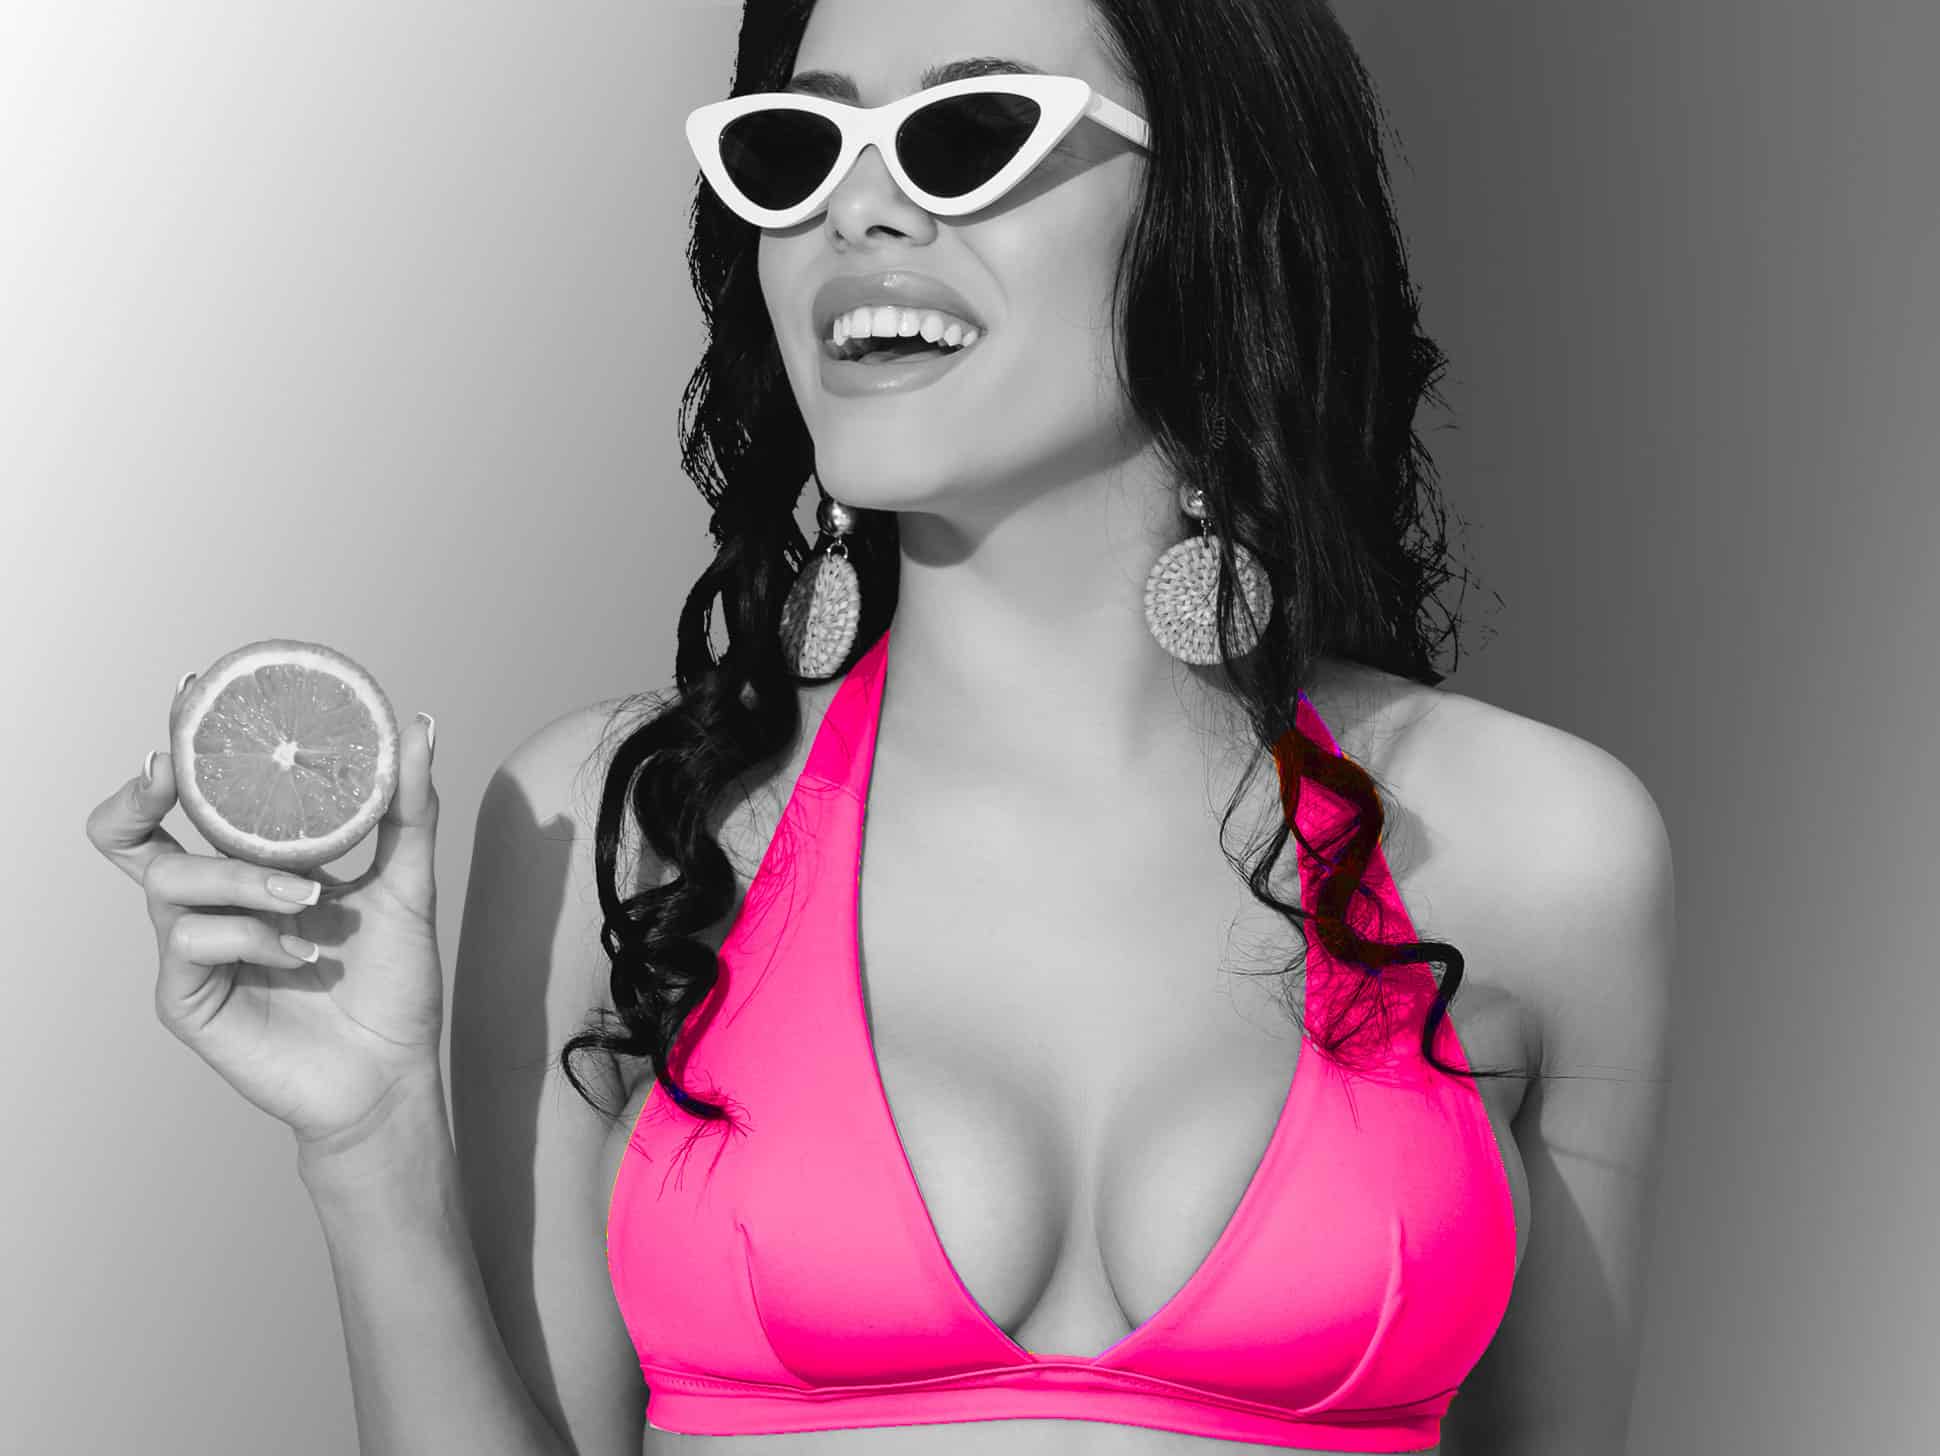 Woman wearing pink bikini poses and smiles